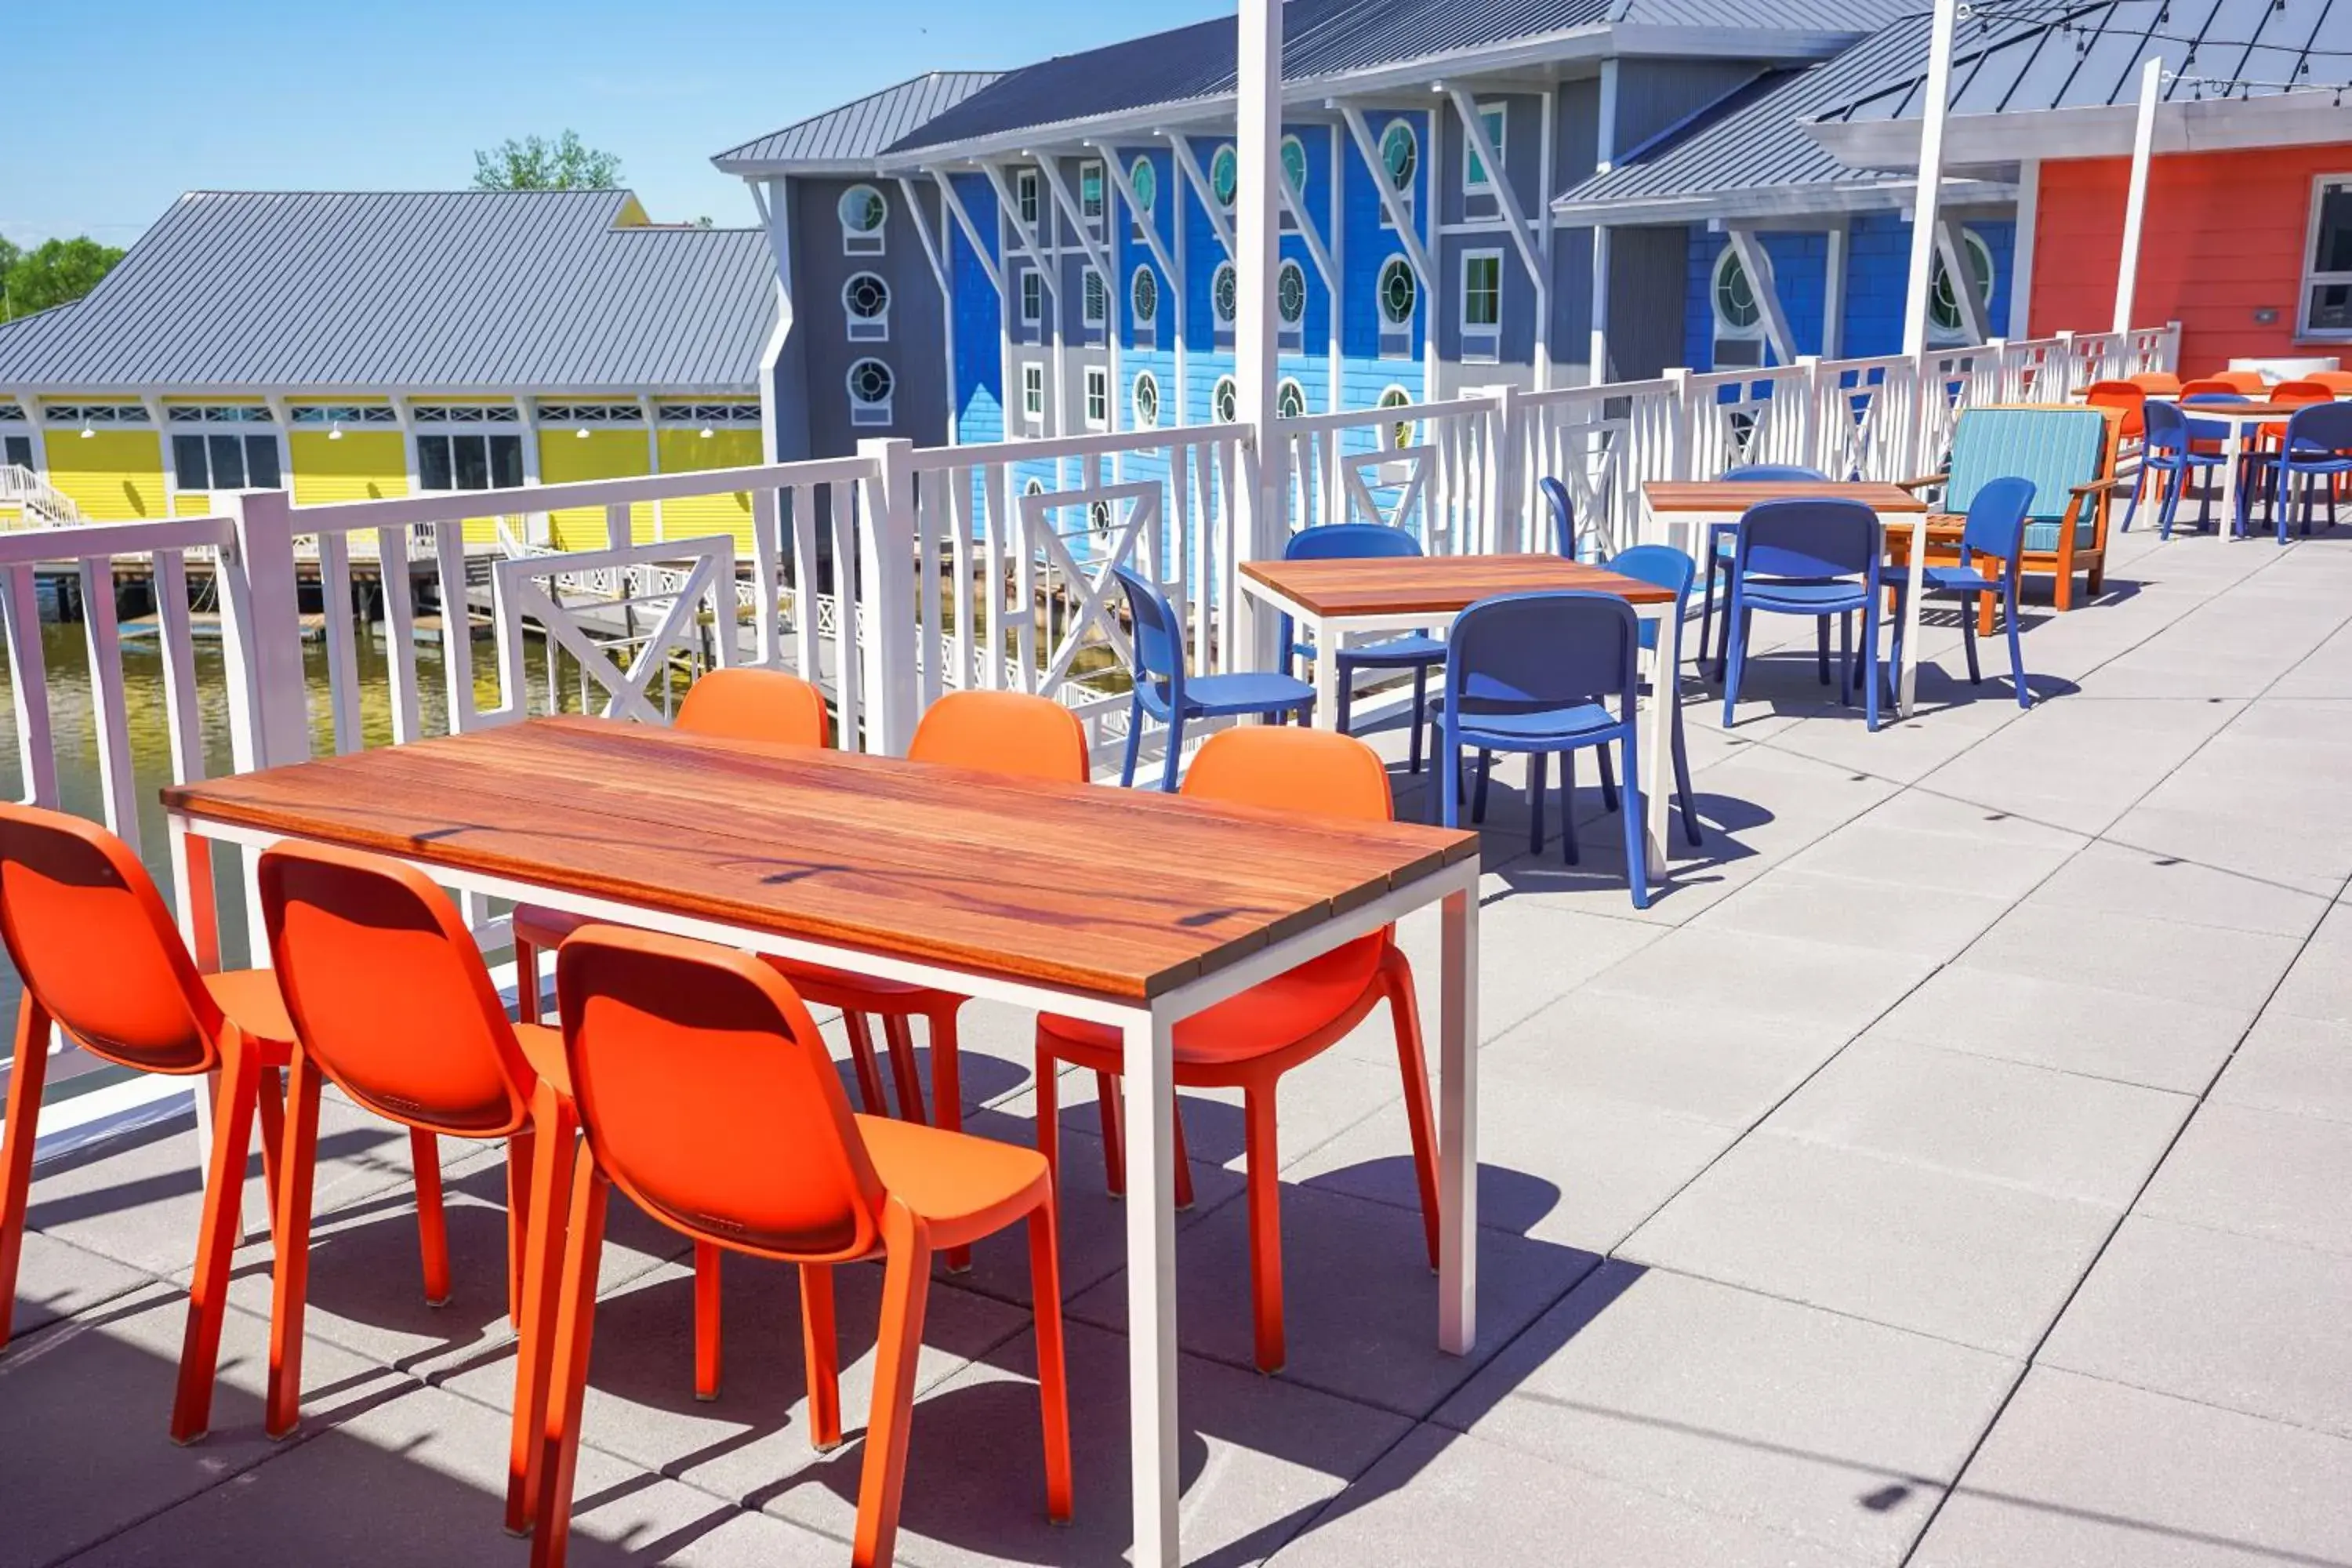 Balcony/Terrace, Restaurant/Places to Eat in Cedar Point Castaway Bay Indoor Water Park